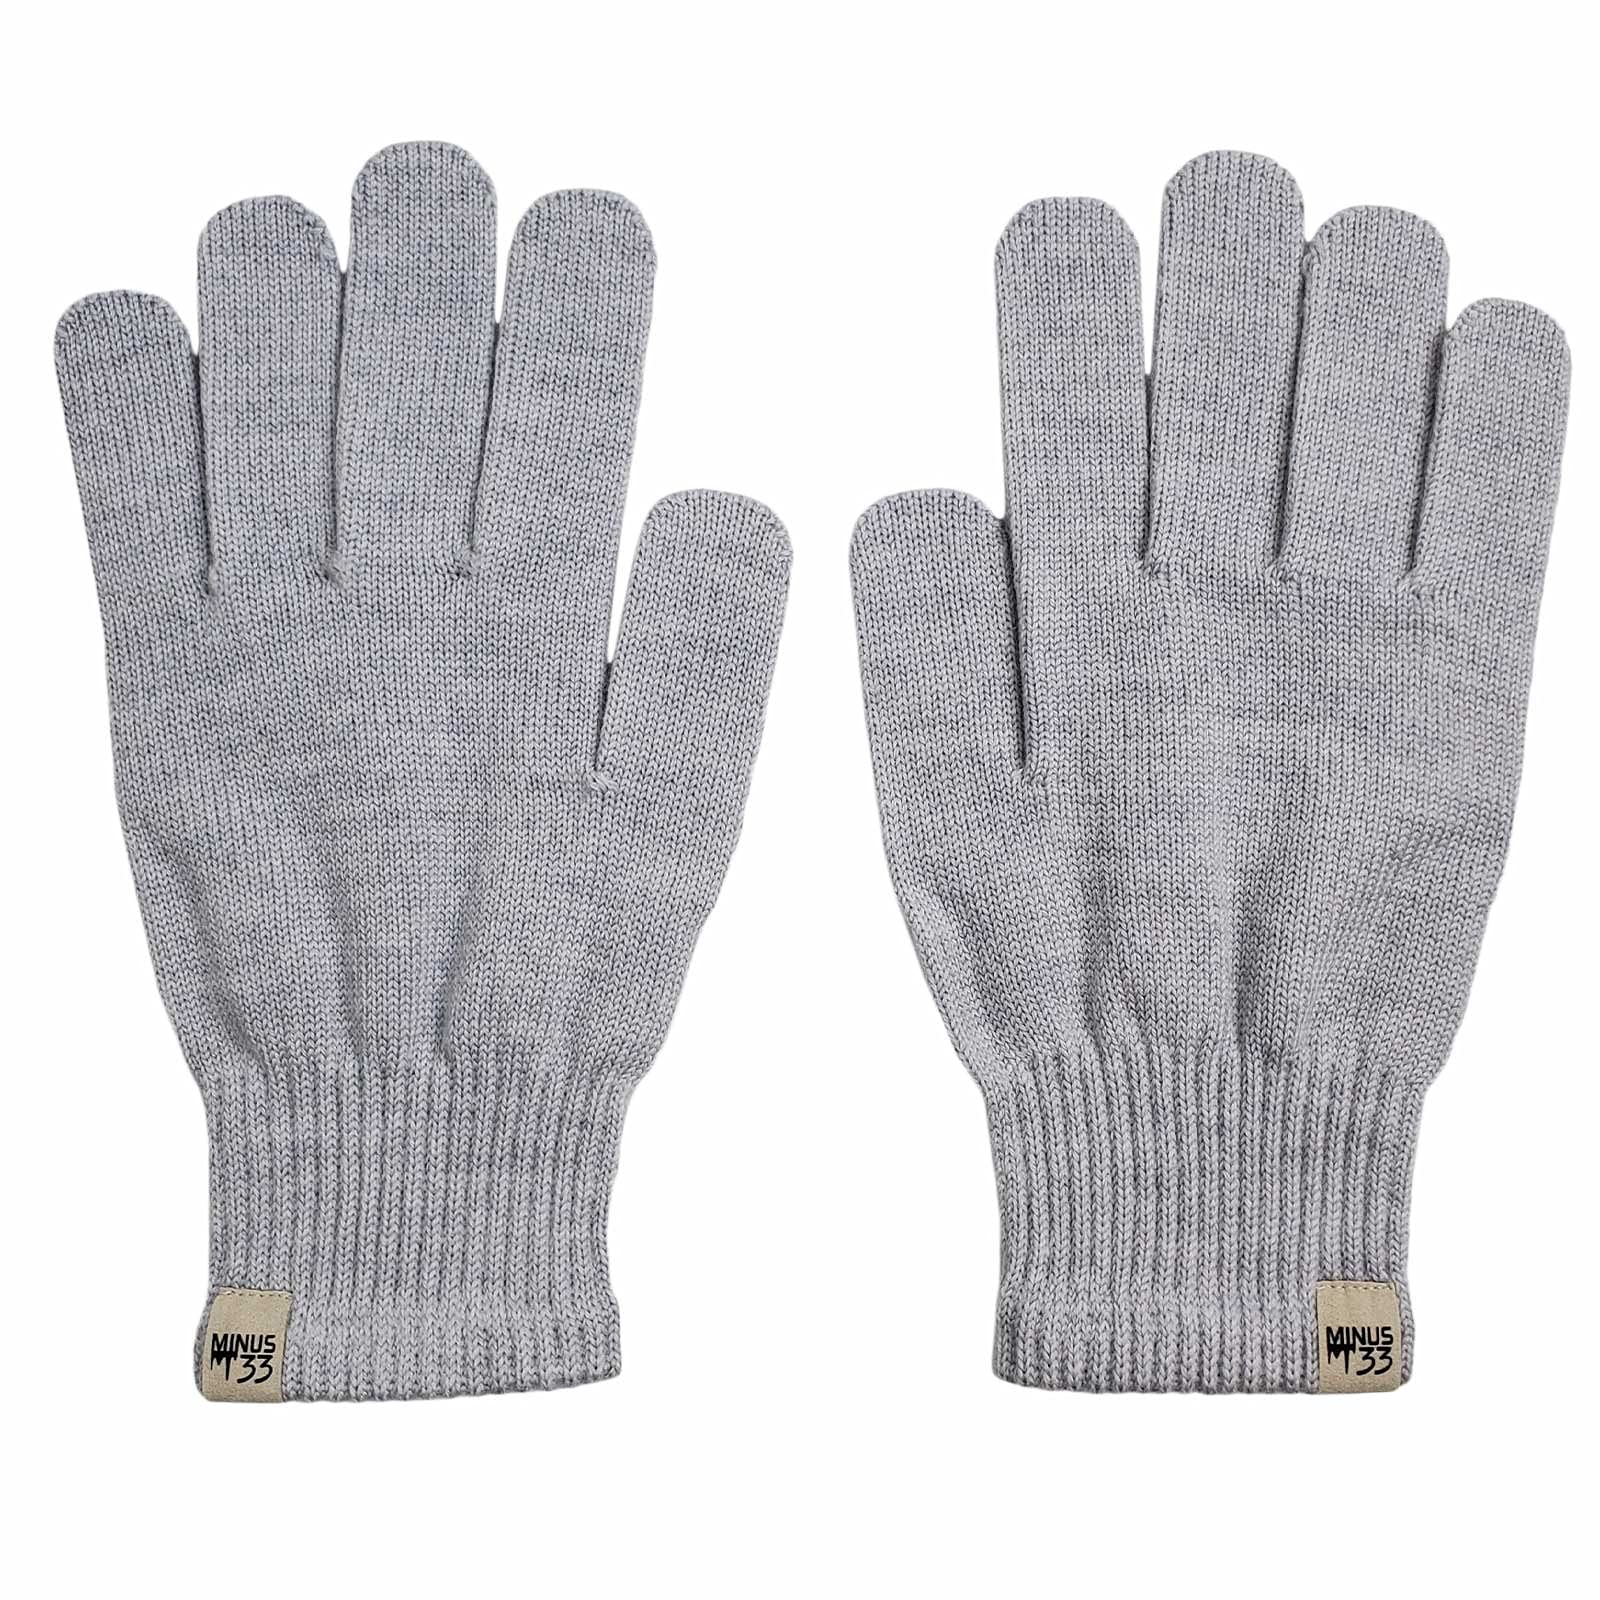 Minus33 Merino Wool Glove Liner - Warm Base Layer - Ski Liner Glove - 3  Season Wear - Multiple Colors and Sizes X-Large Ash Gray